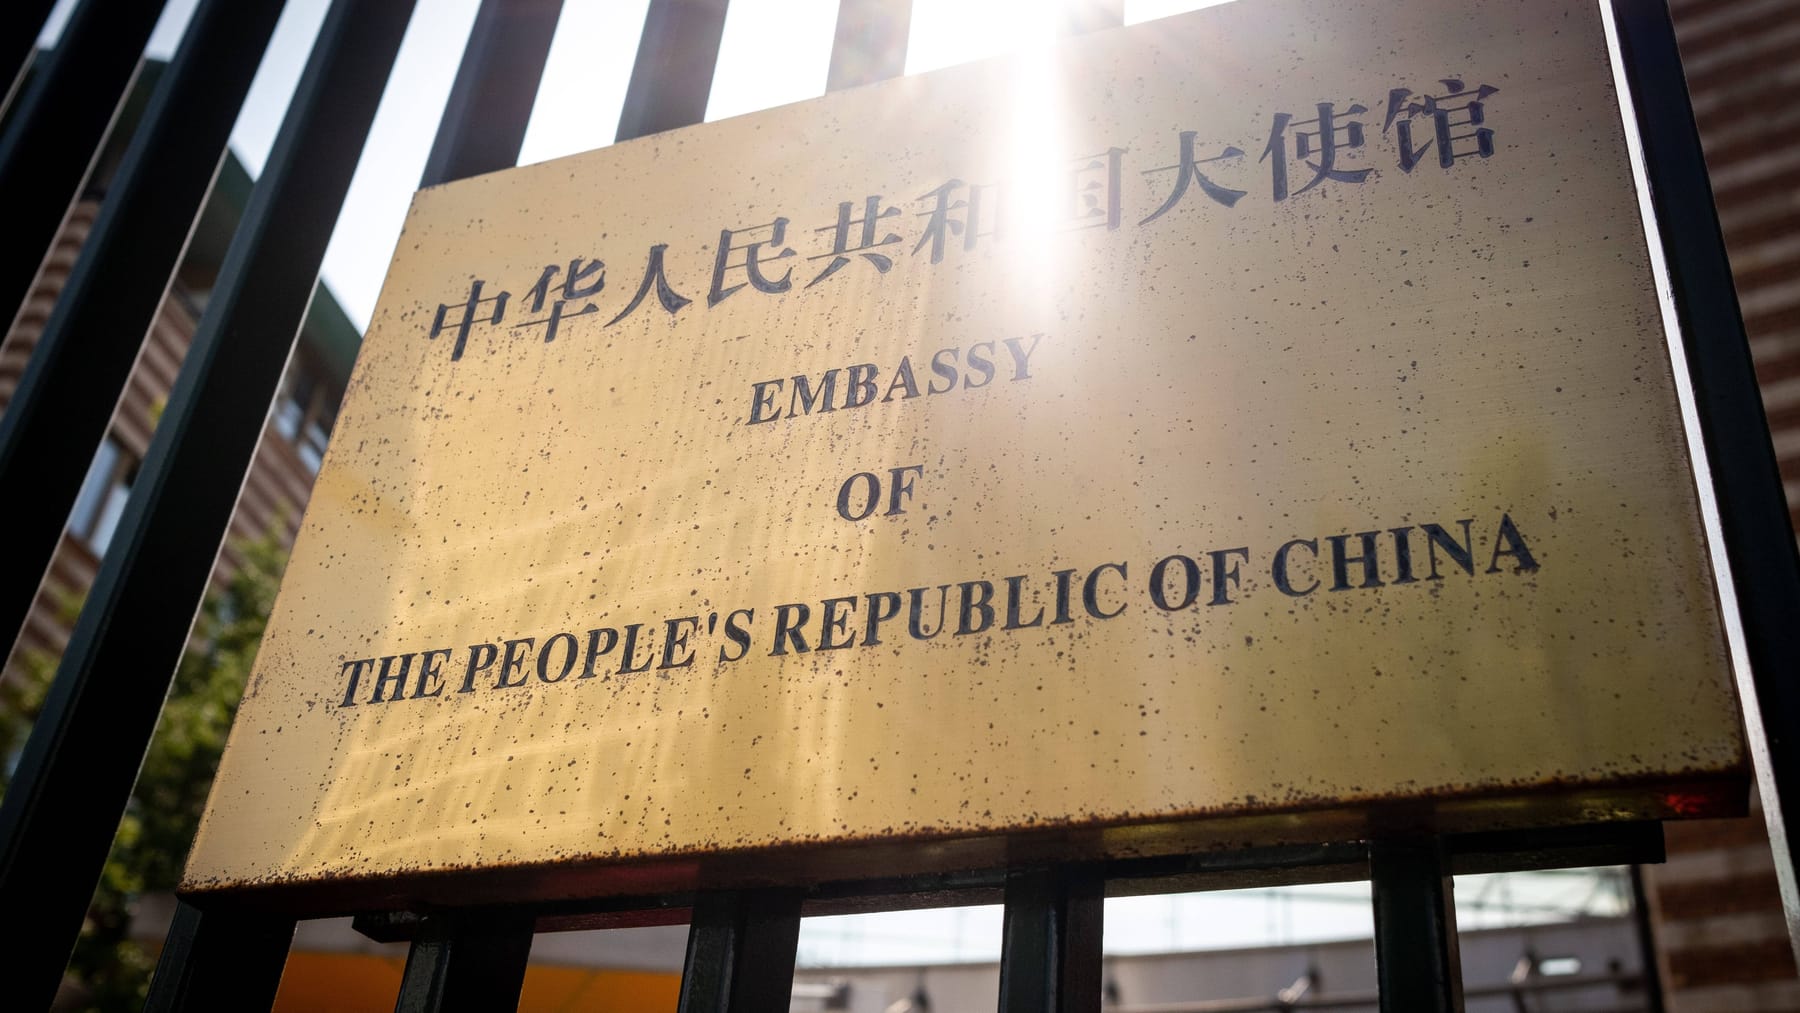 Verdenking van illegale “politiebureaus” in China